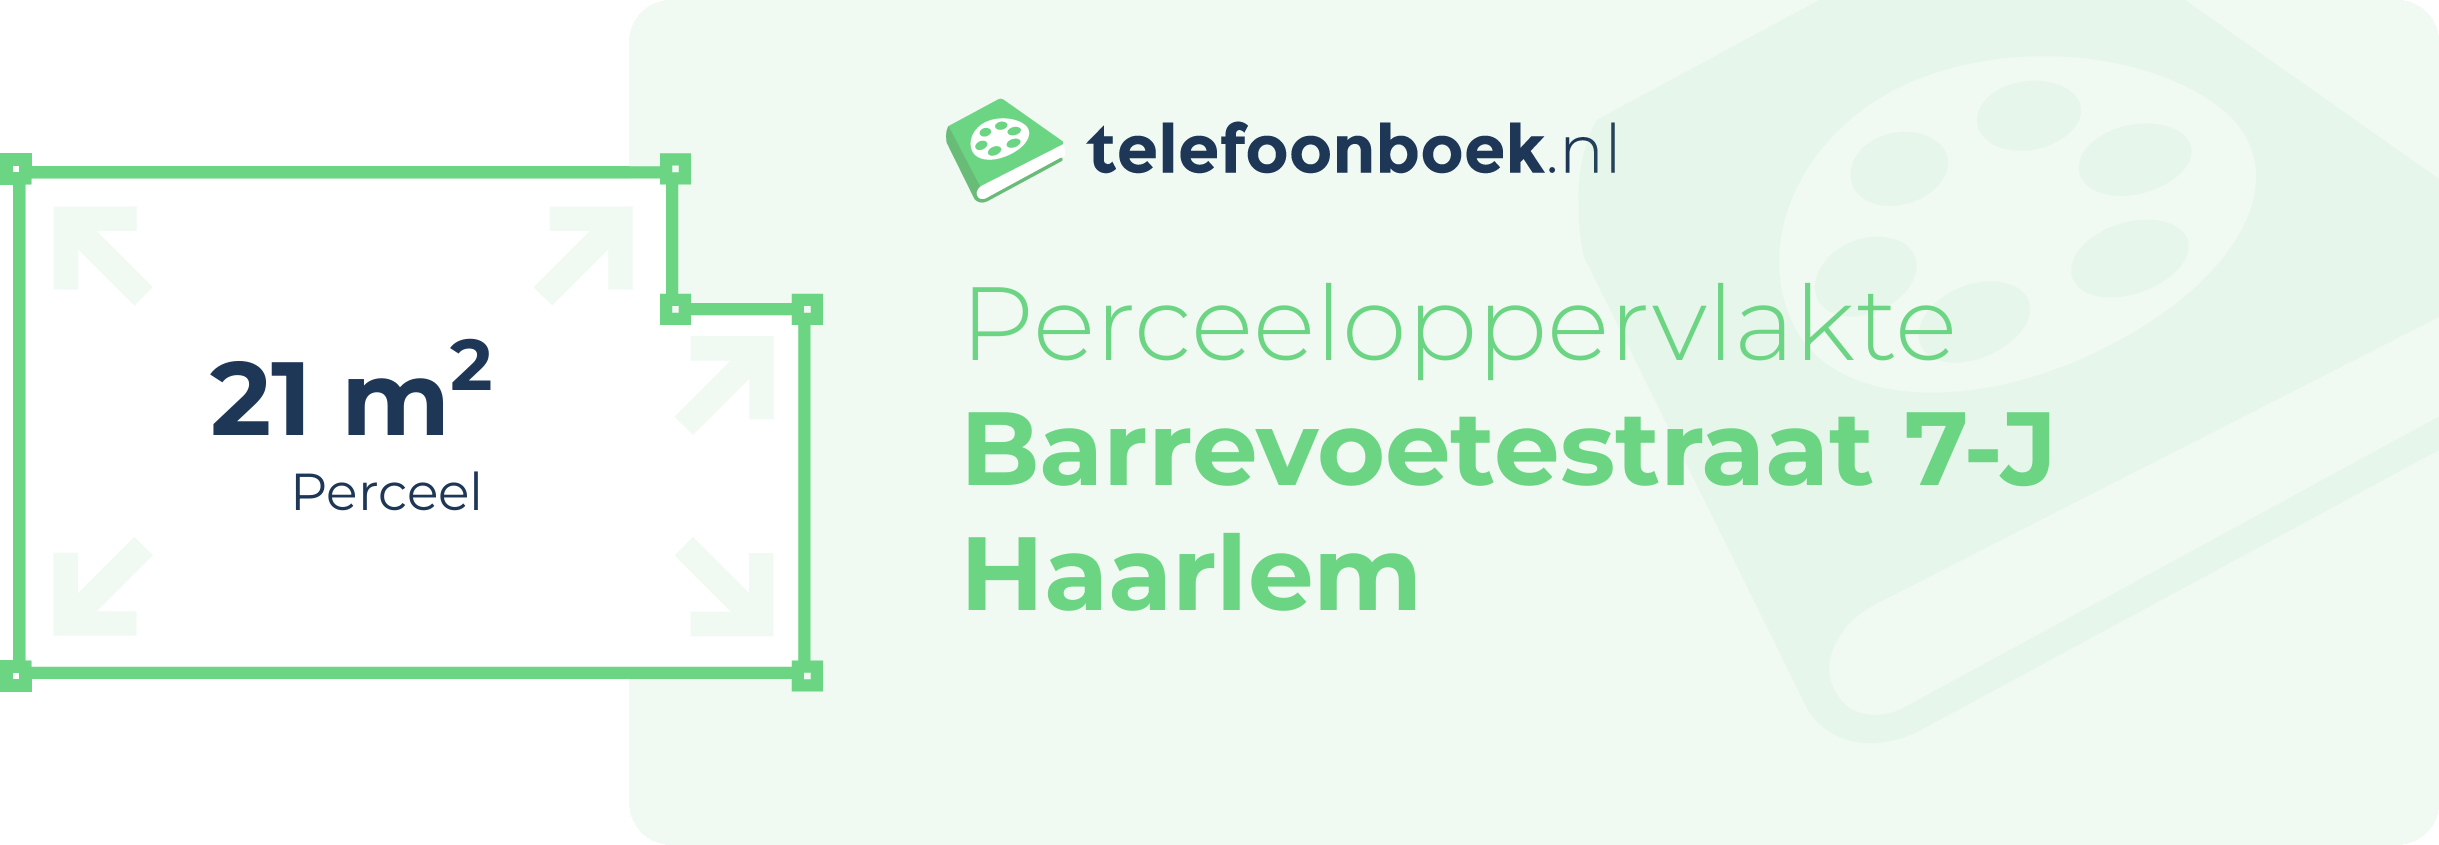 Perceeloppervlakte Barrevoetestraat 7-J Haarlem